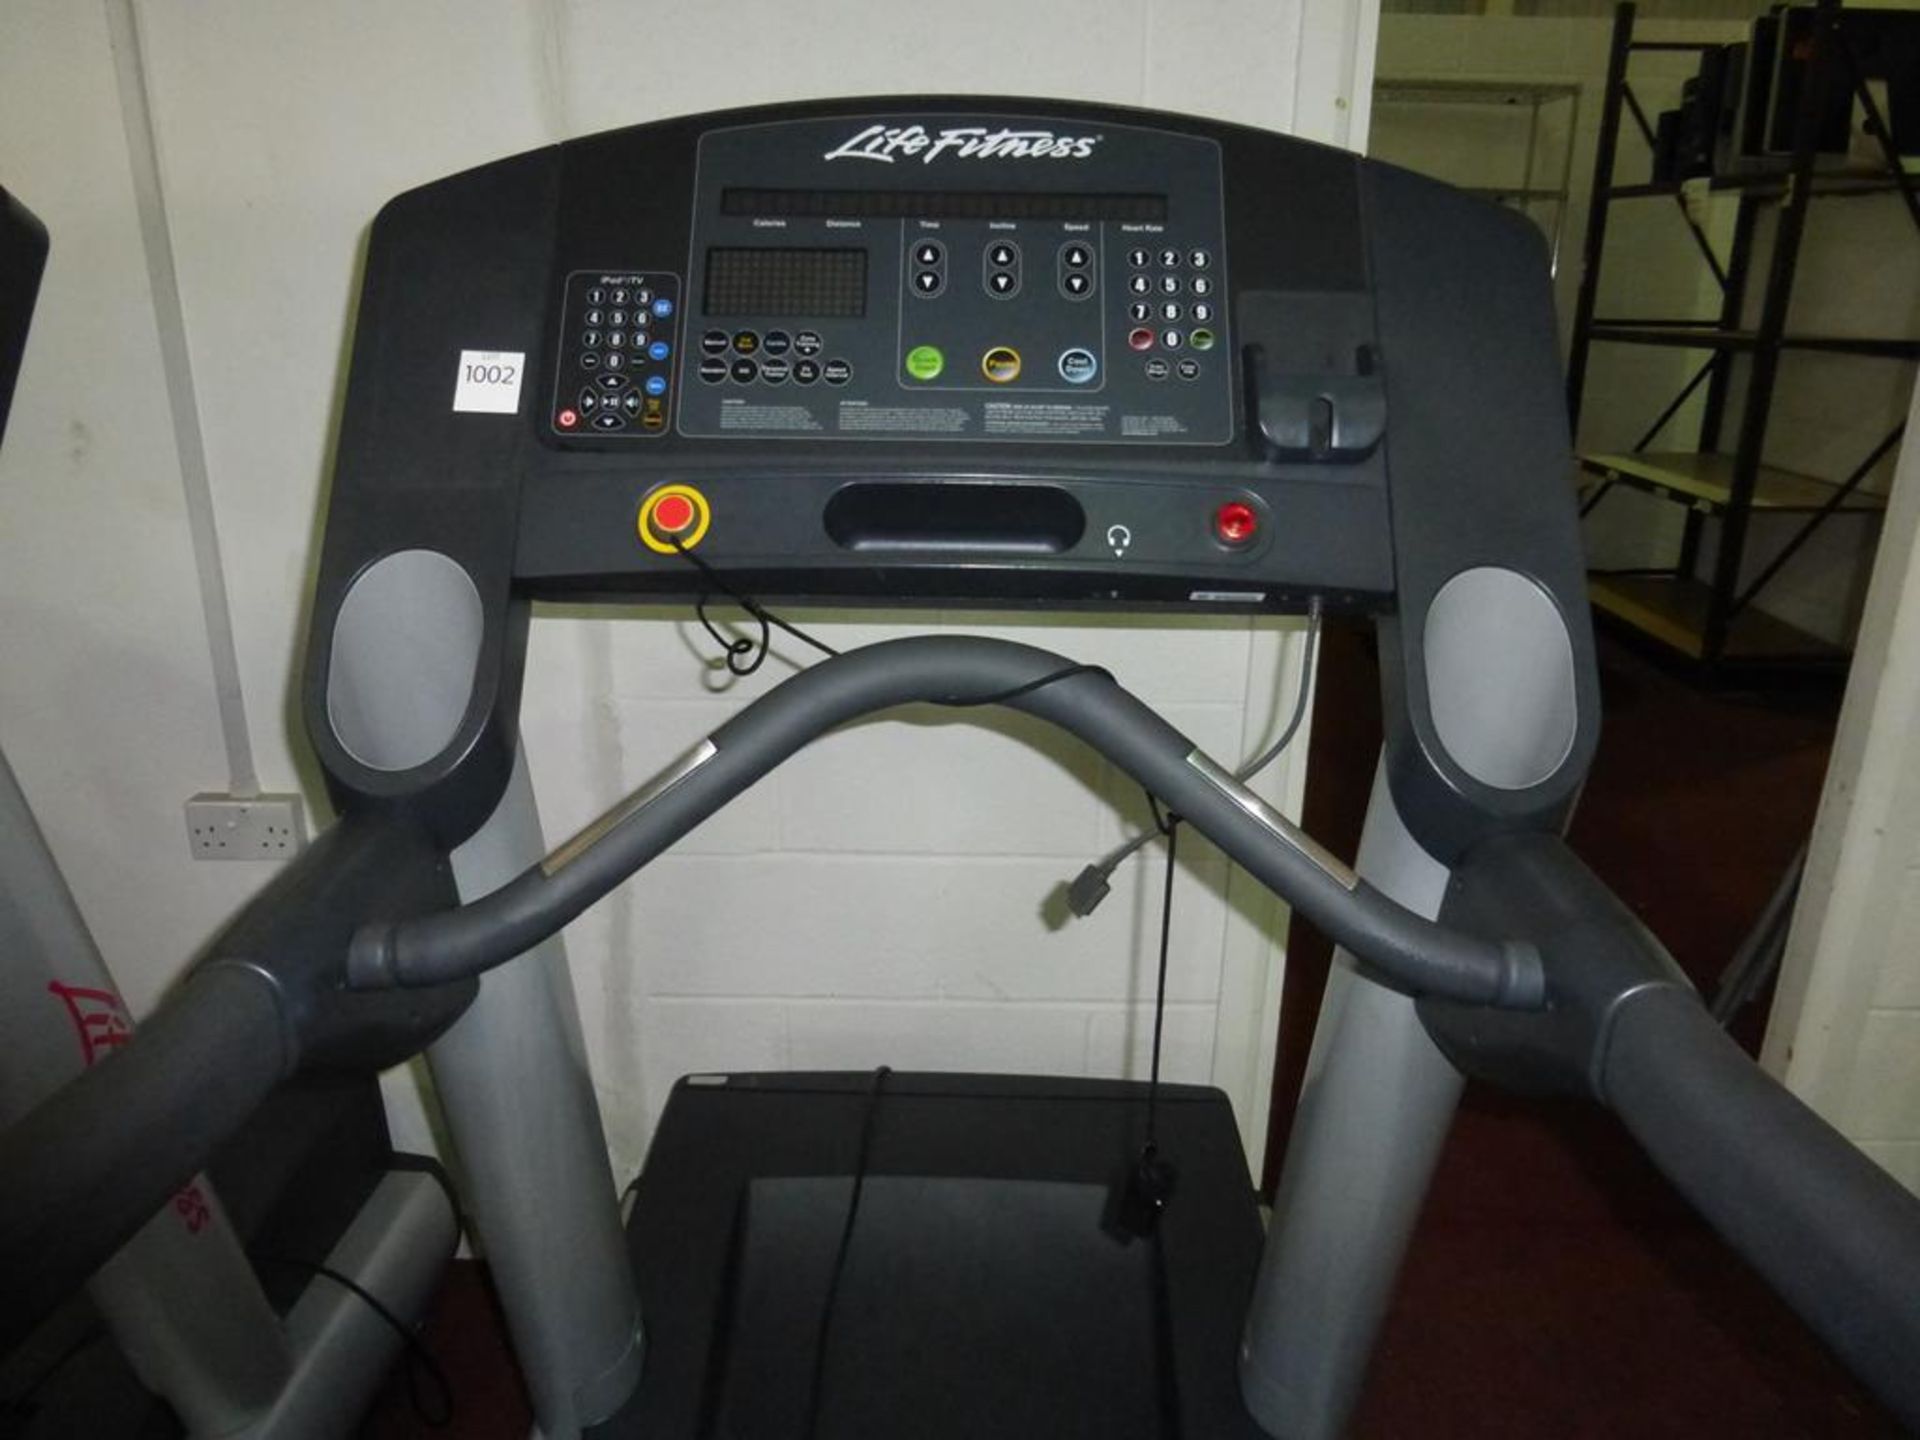 Life Fitness Flexdeck Treadmill - Image 2 of 3